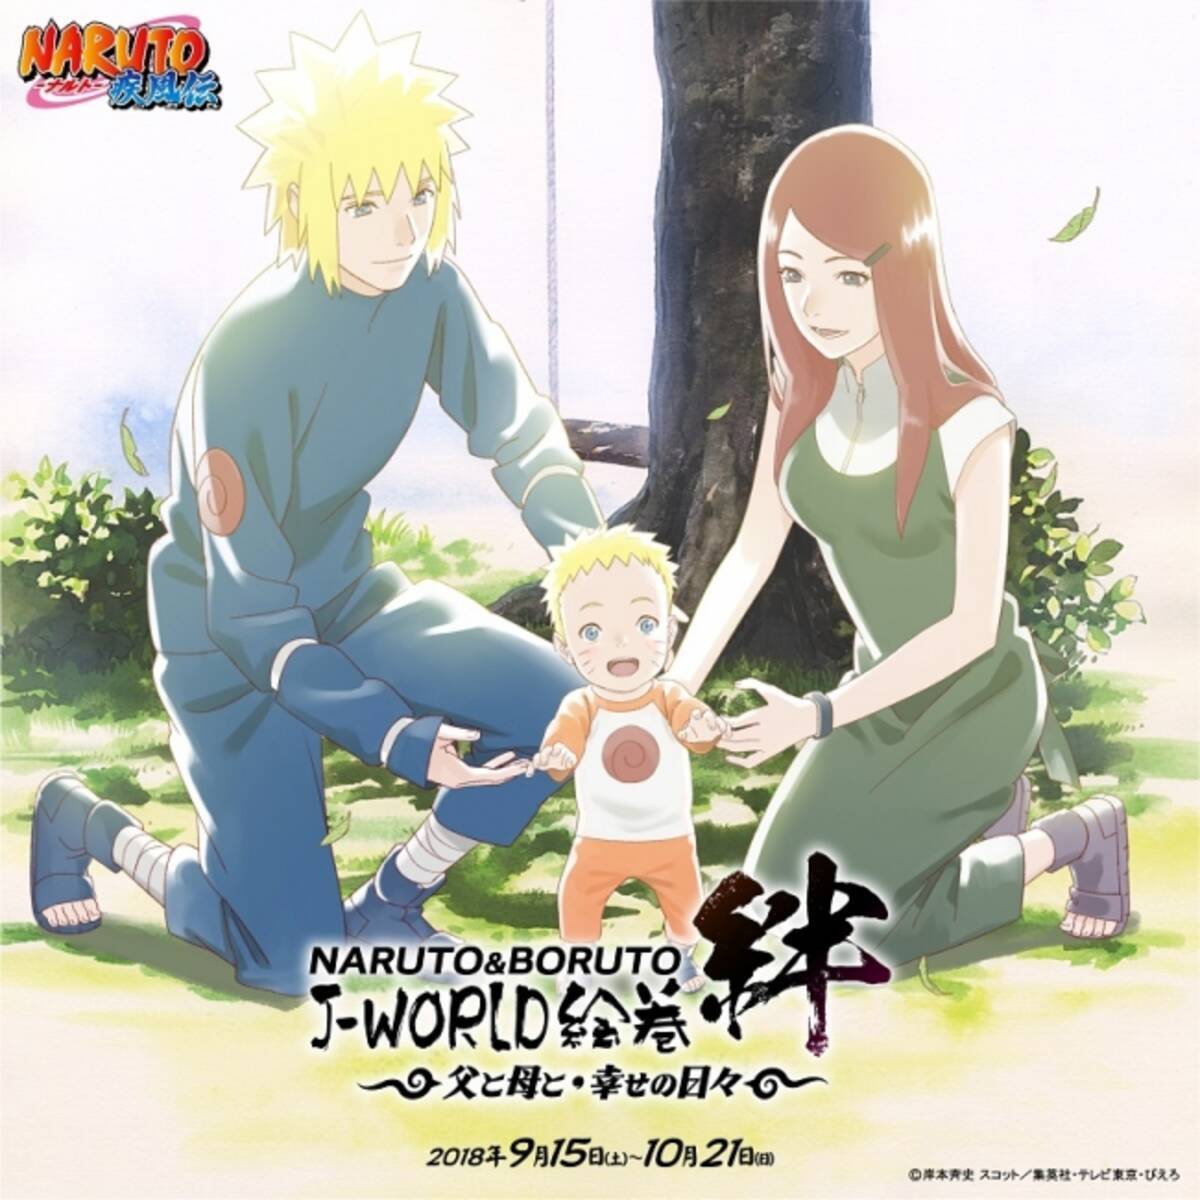 Naruto Boruto J World絵巻 絆 父と母と 幸せの日々 18年9月15日 土 10月21日 日 18年9月4日 エキサイトニュース 4 5